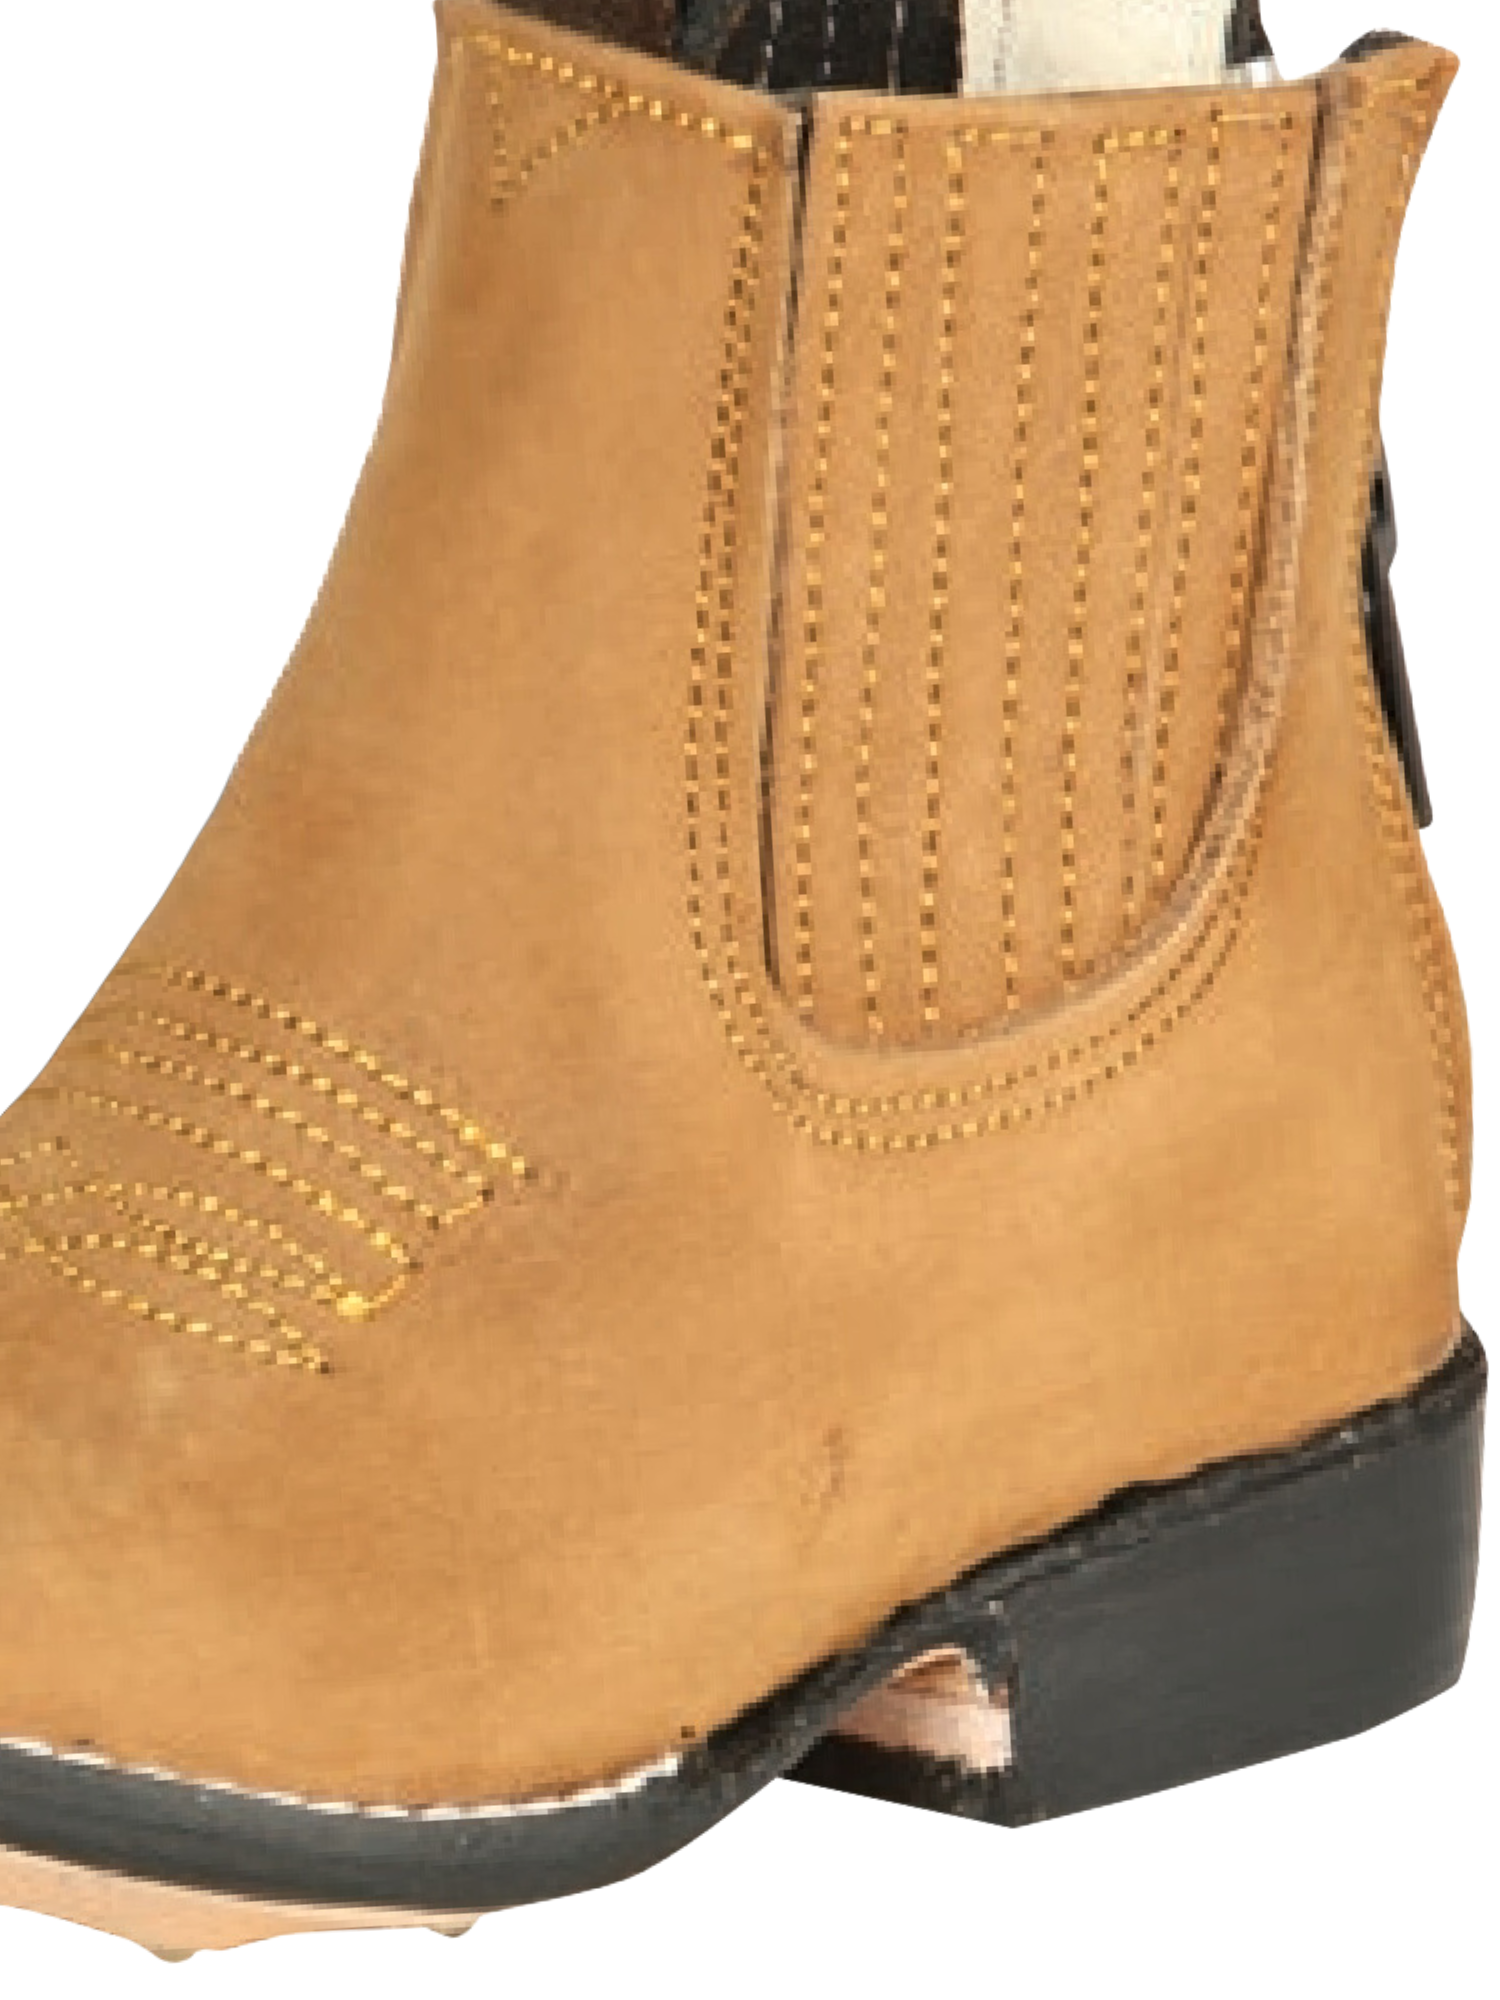 Kids - Botines Vaqueros Clasicos de Piel Nobuck para Bebes 'Jar Boots' - ID: 126582 Cowboy Ankle Boots Jar Boots 